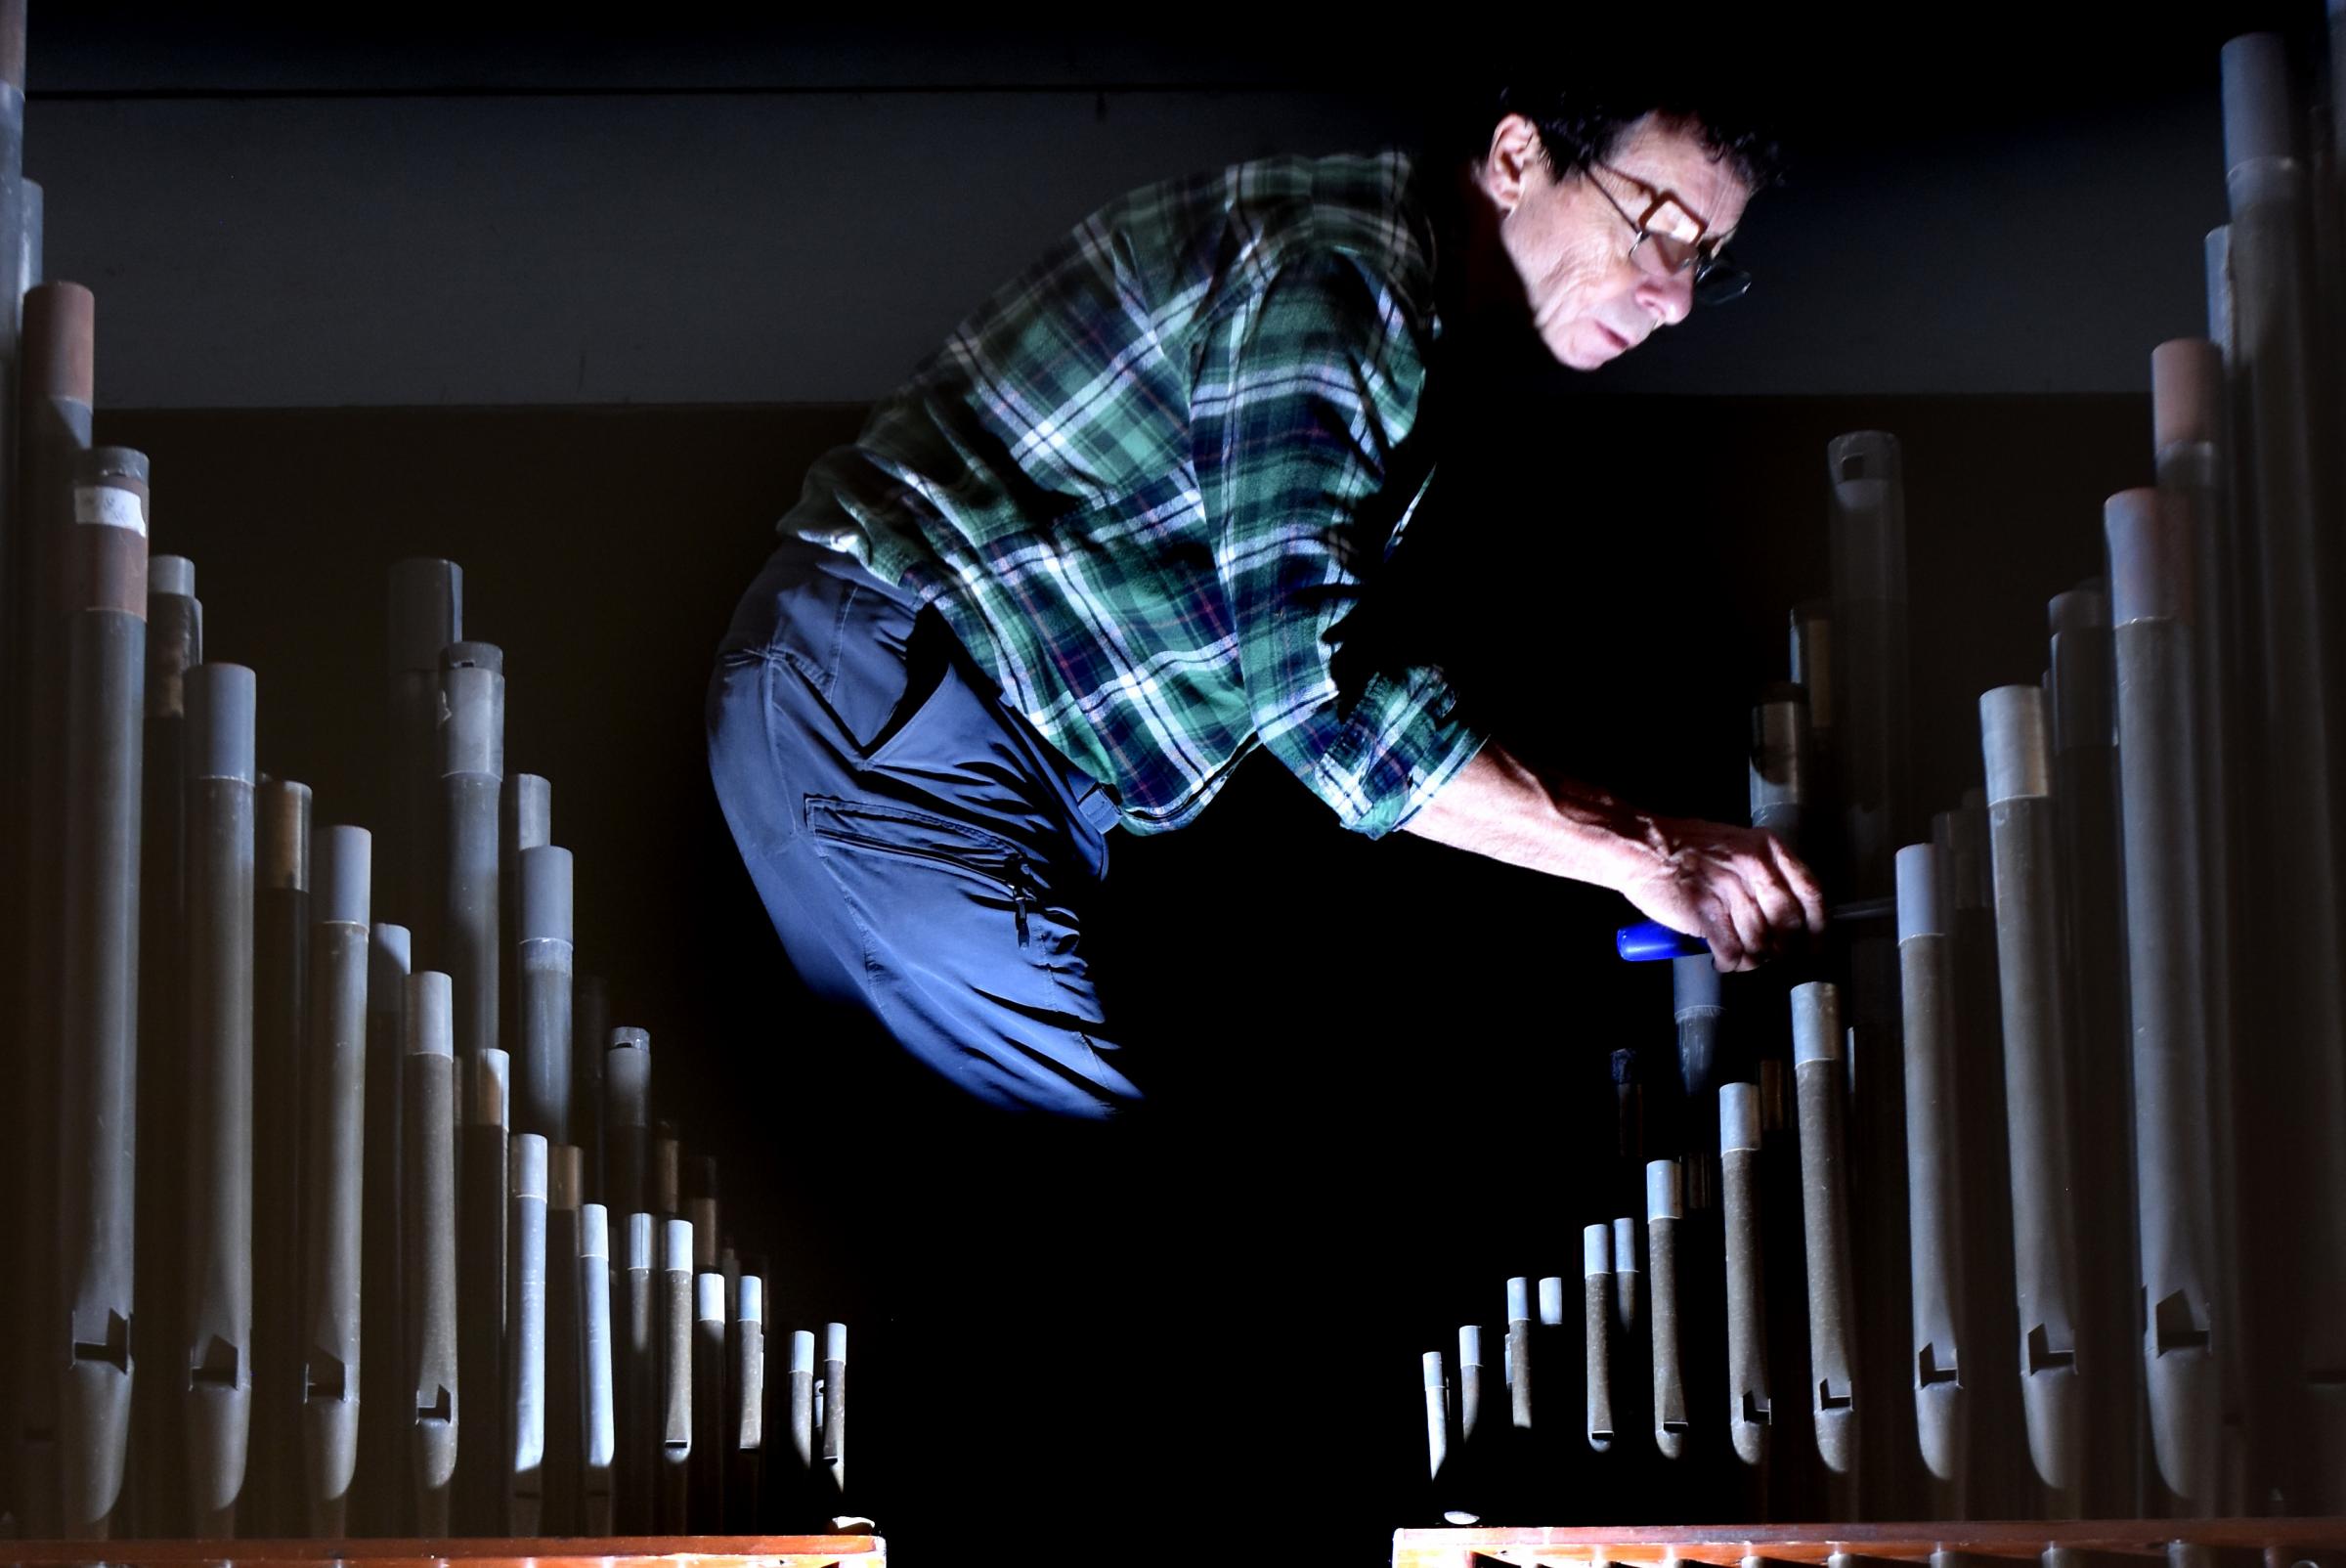 Fine-tuning under way as new organ installed at St Deny's Church